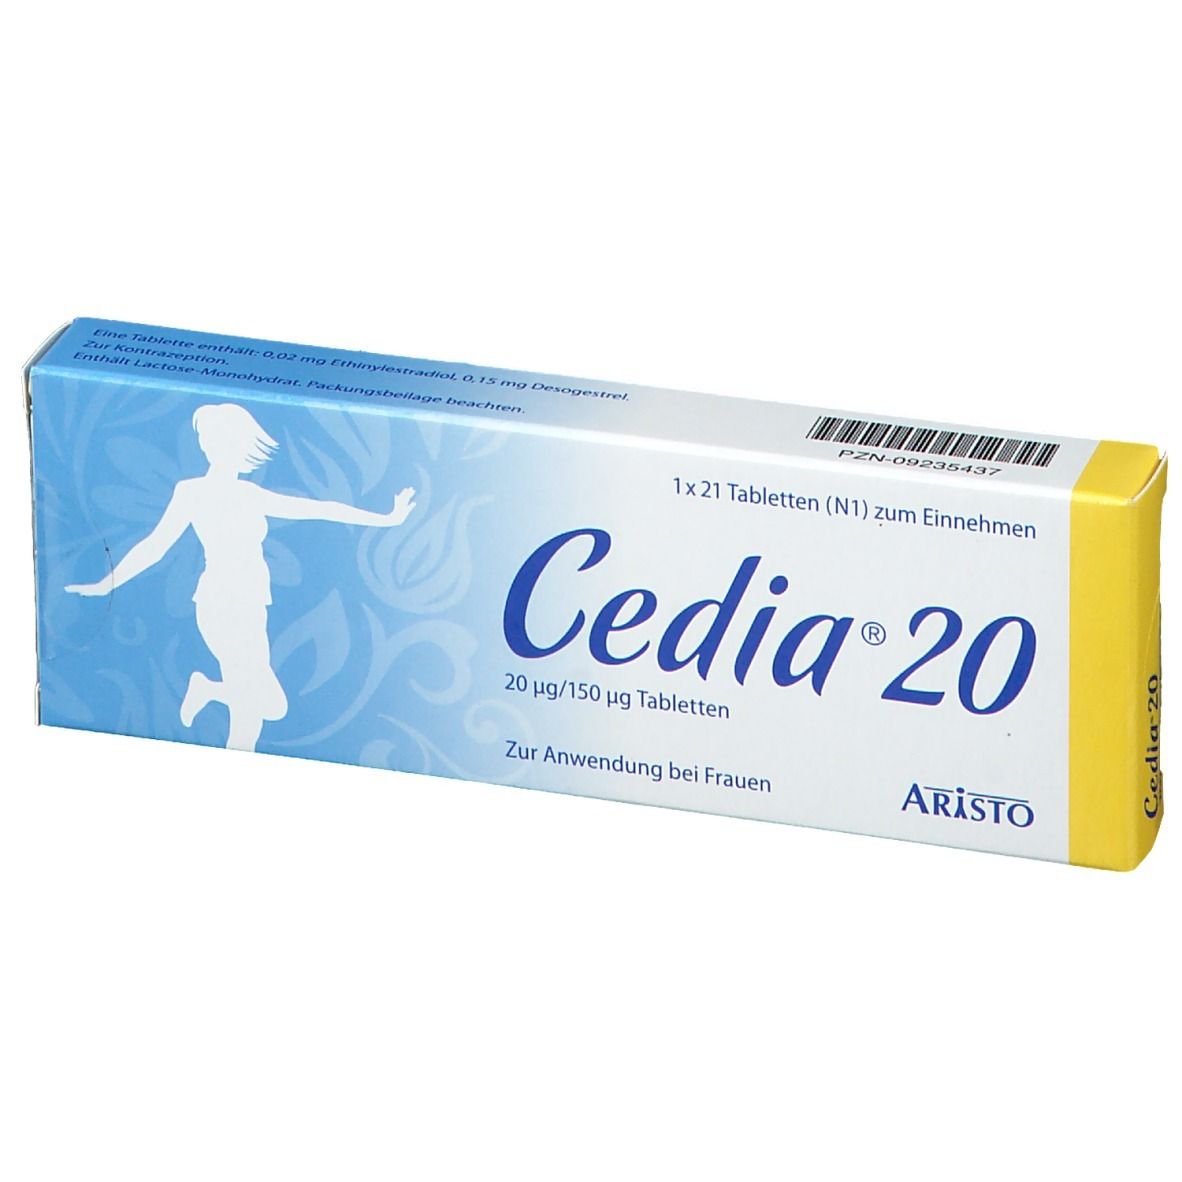 Cedia® 20 20 µg/150 µg